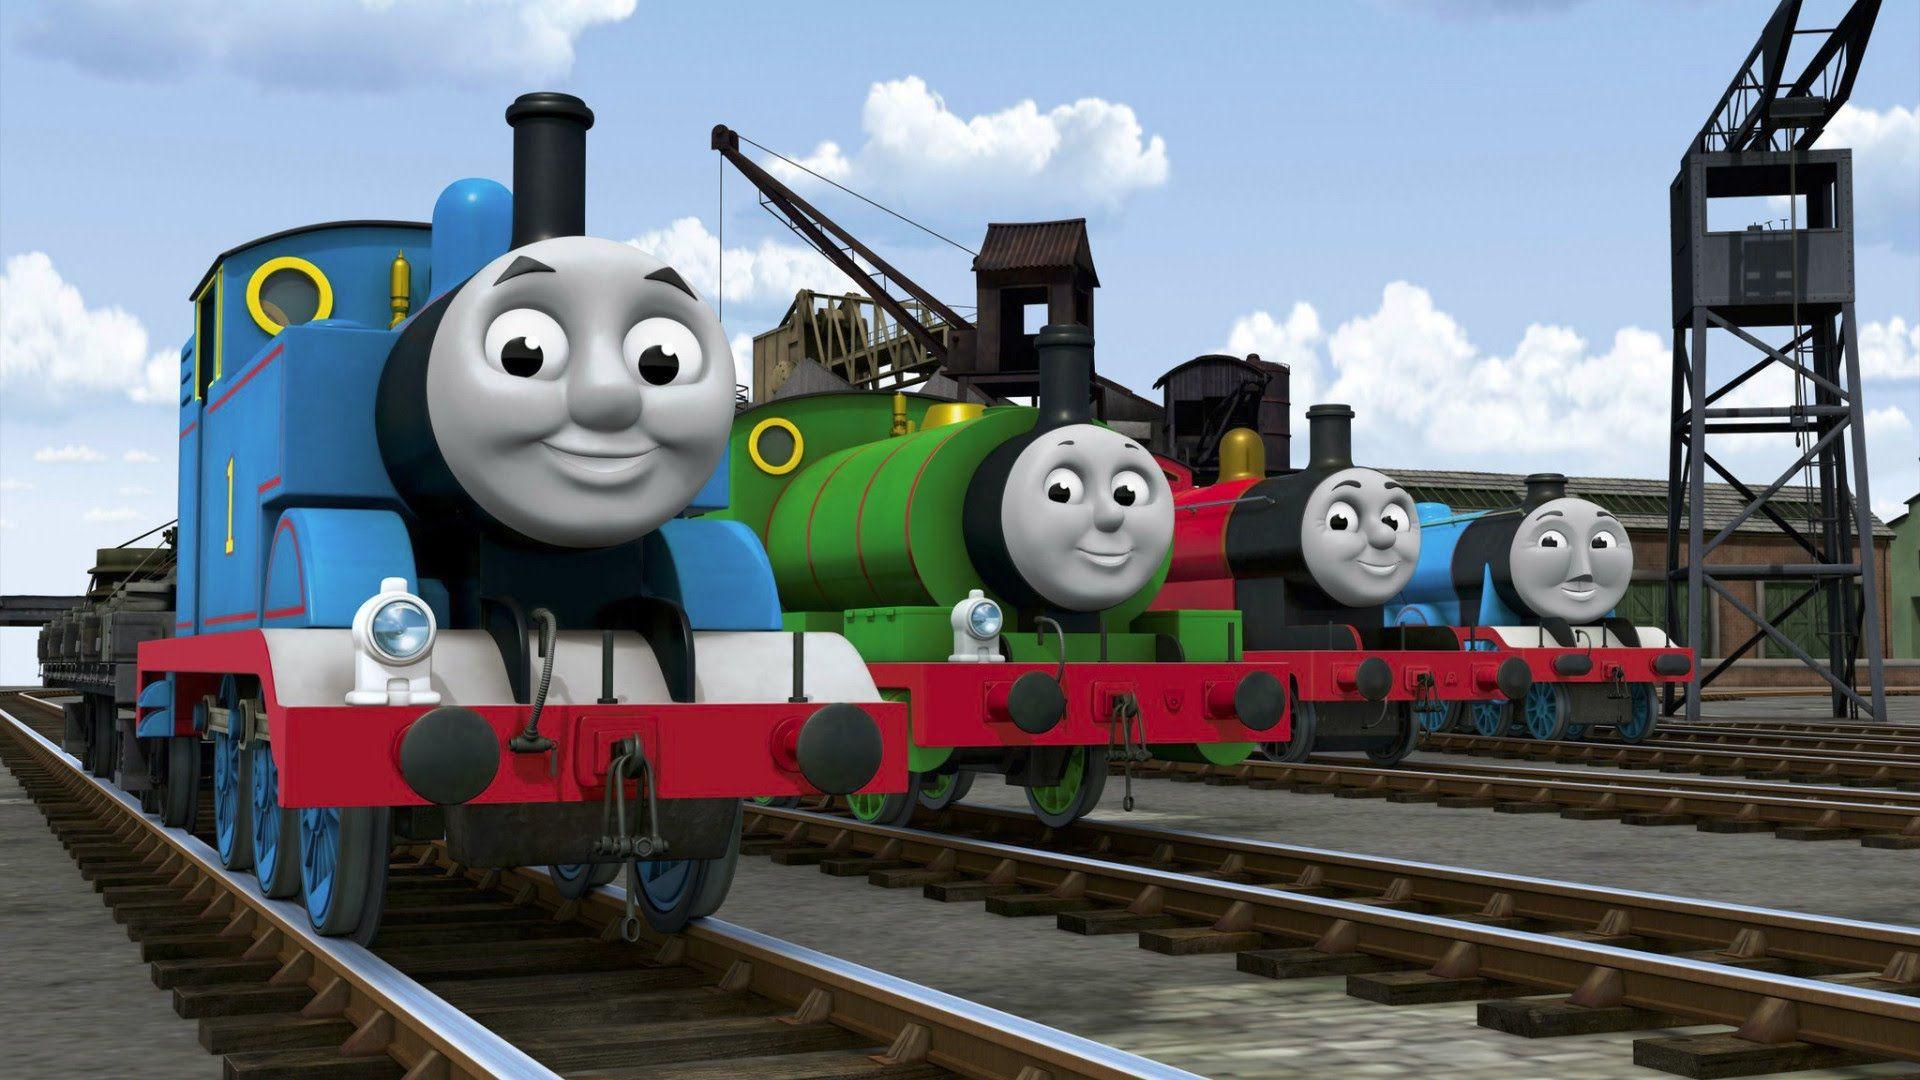 Thomas & Friends long episode Thomas the Tank Engine & Friends